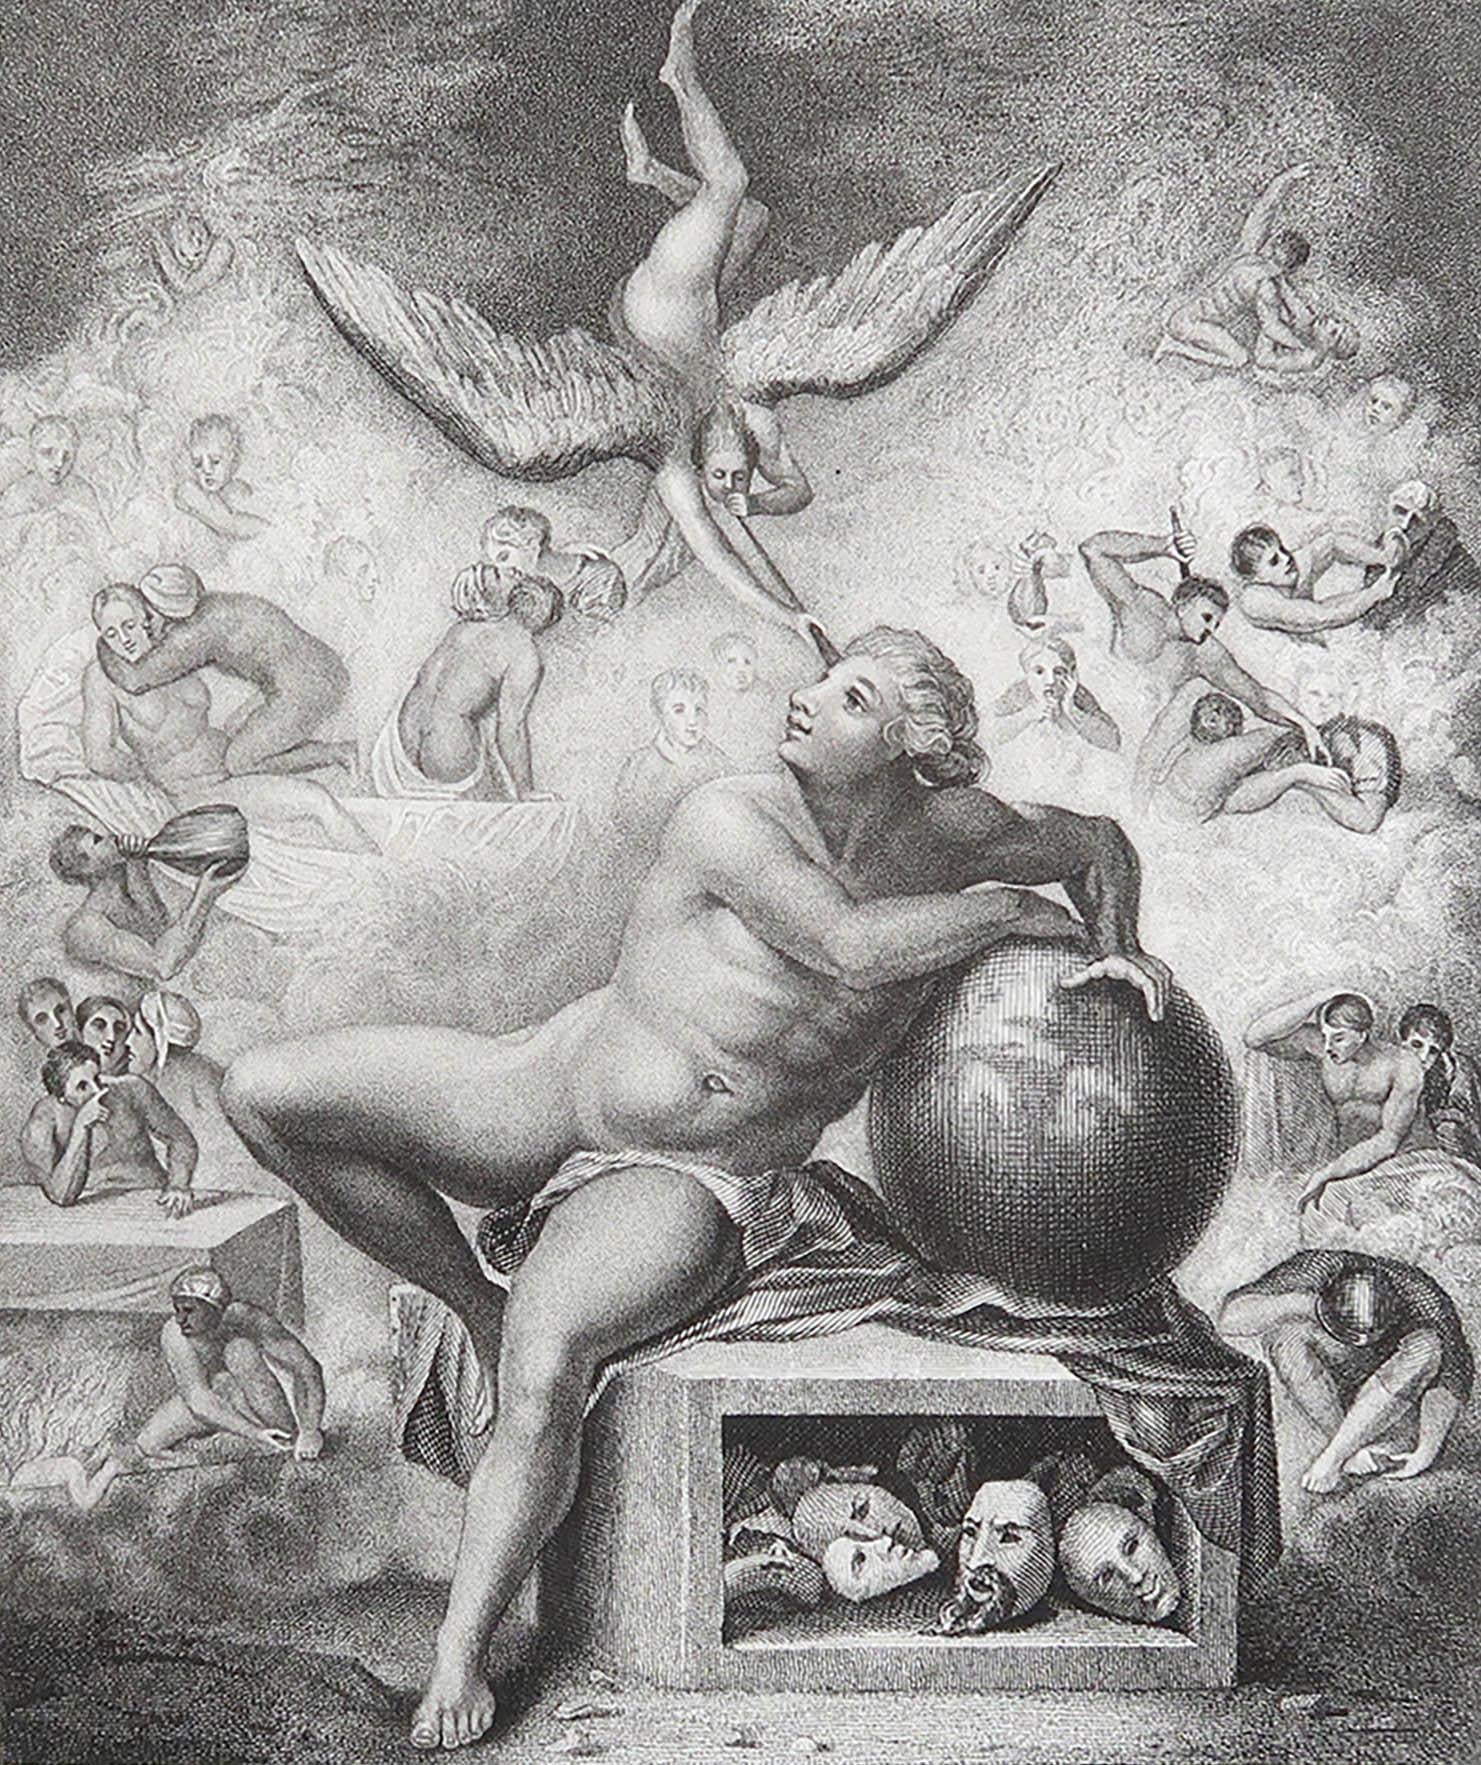 Wonderful image after Michelangelo

Fine Steel engraving. 

Published by Jones & Co. C.1850

Unframed.

